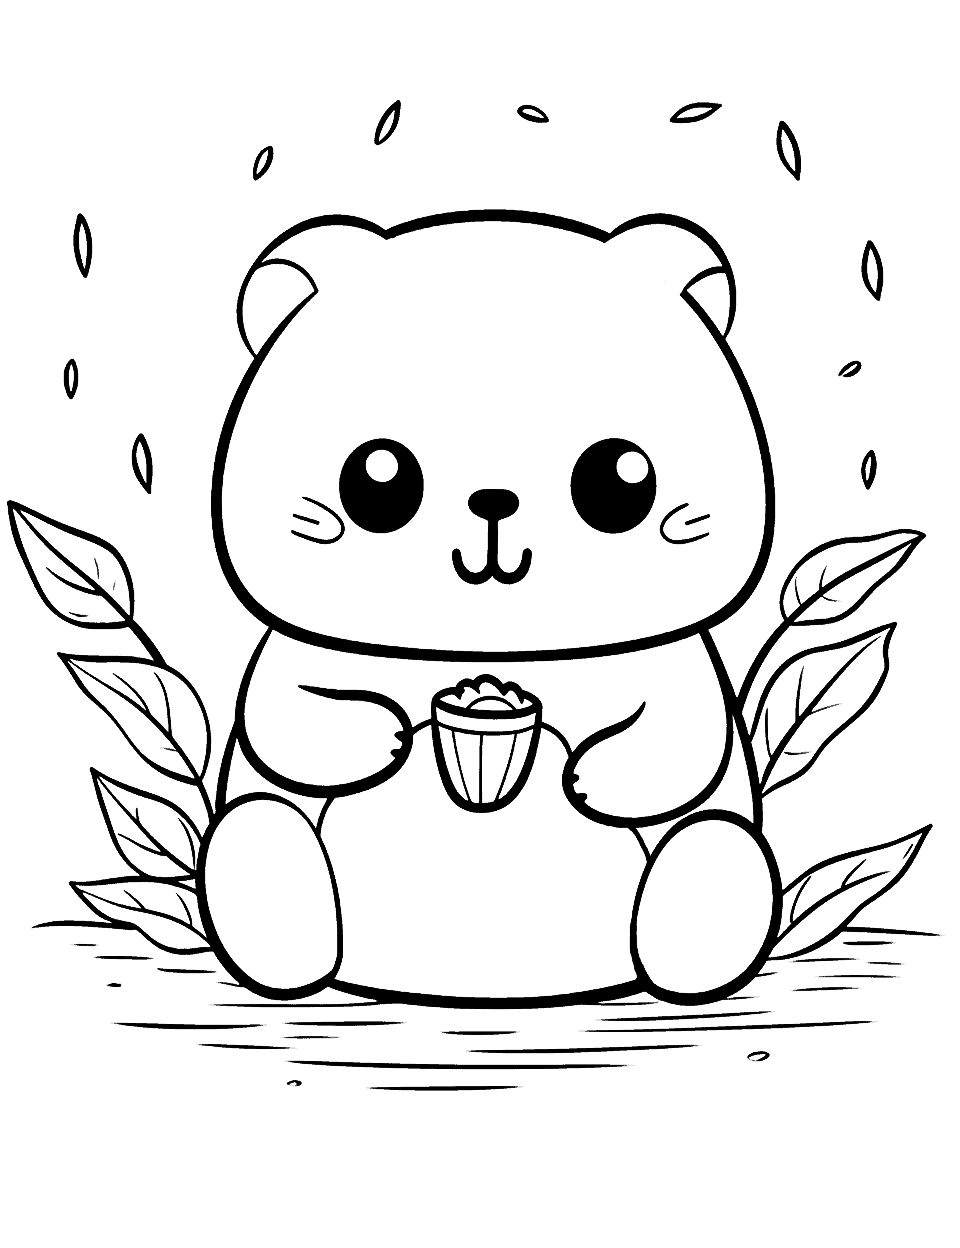 Panda's Lunch Kawaii Coloring Page - A cute Kawaii panda enjoying its favorite lunch in the forest.